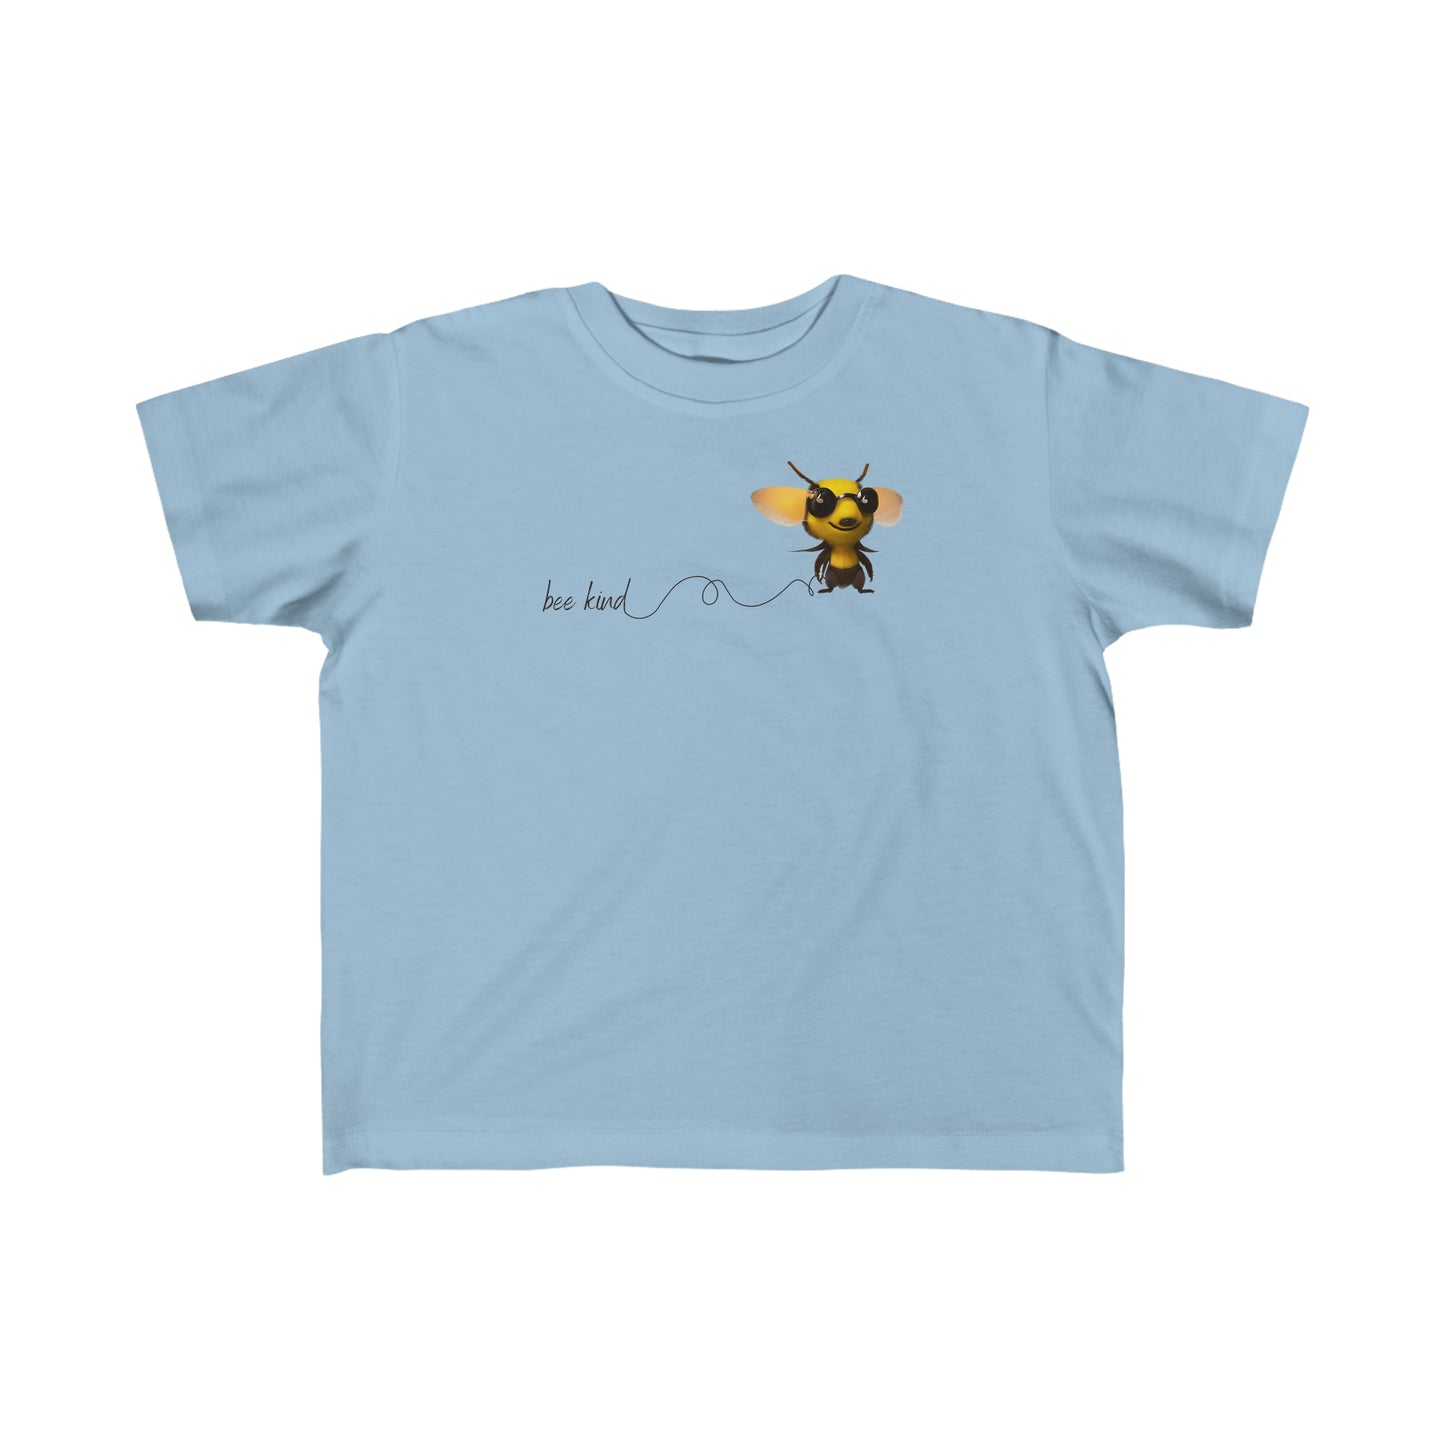 Bee Kind Kids T-Shirt in Light Blue